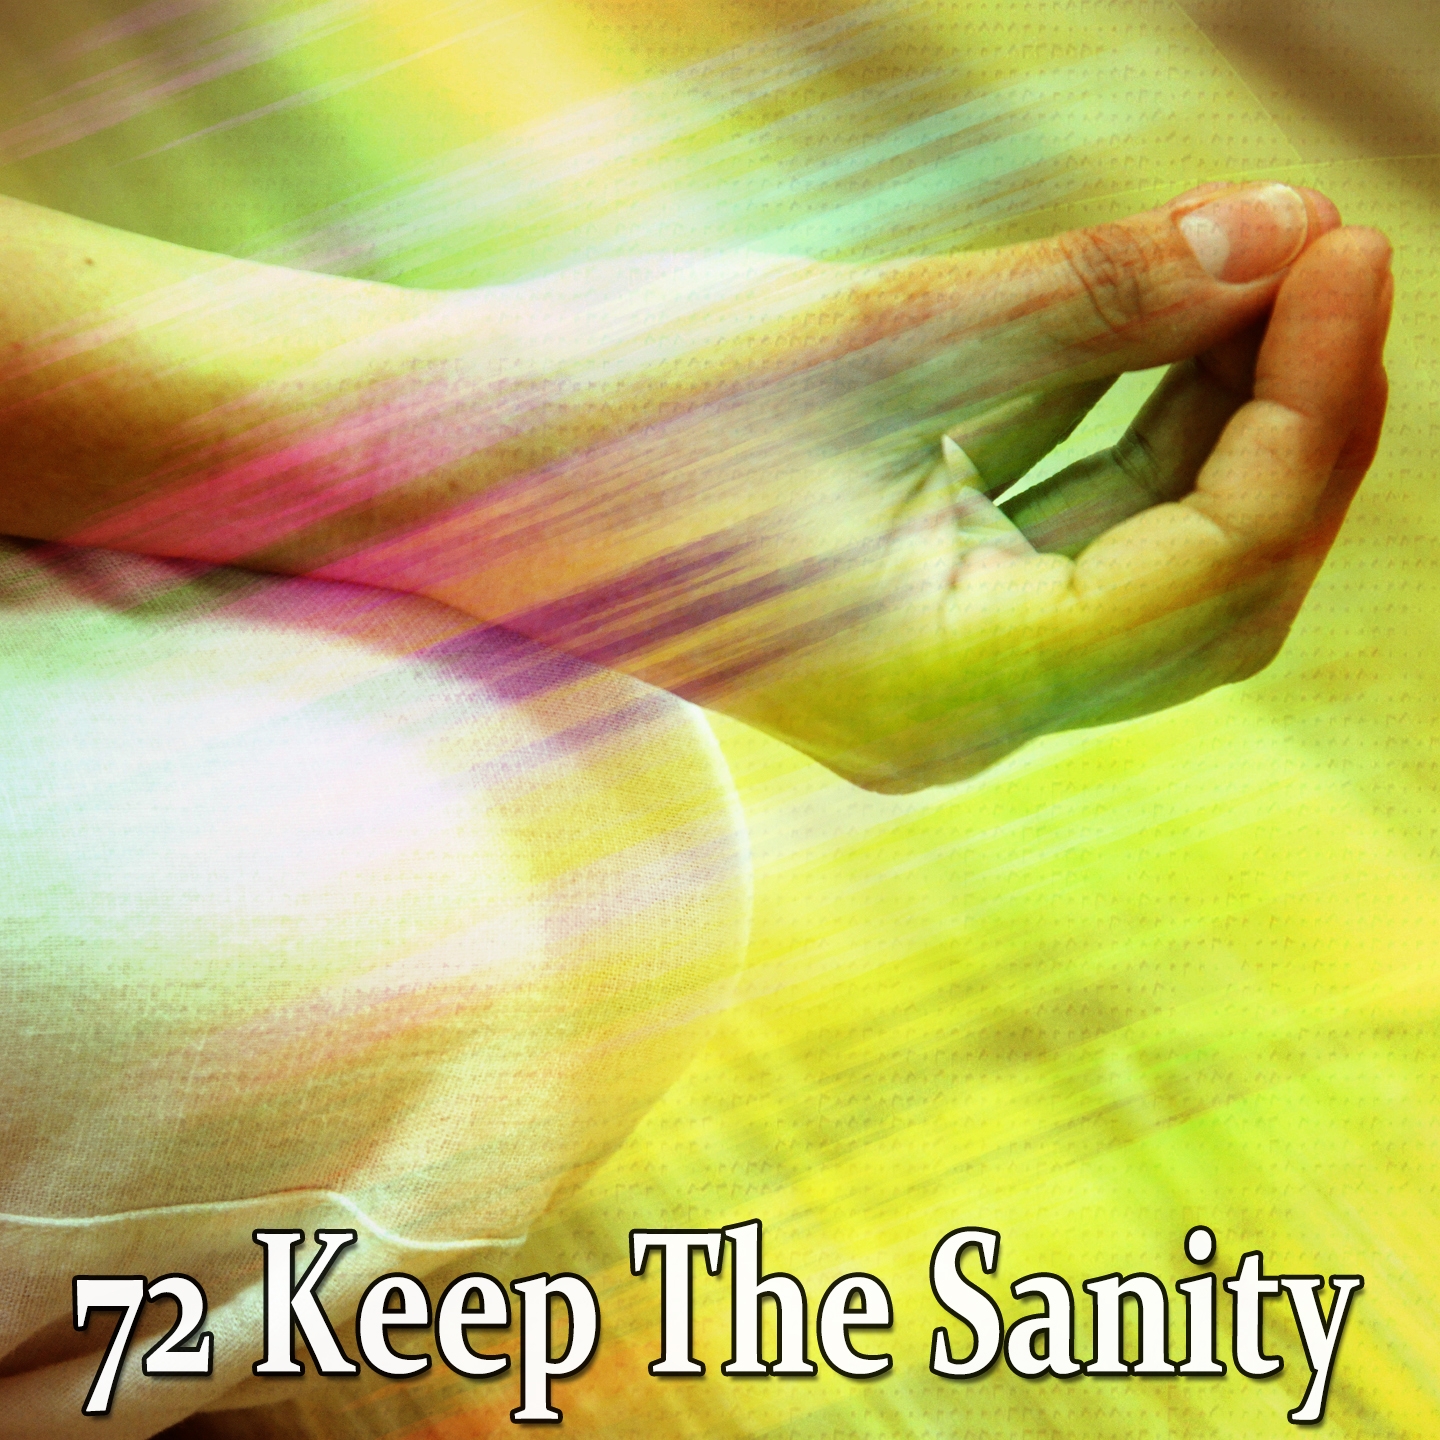 72 Keep The Sanity